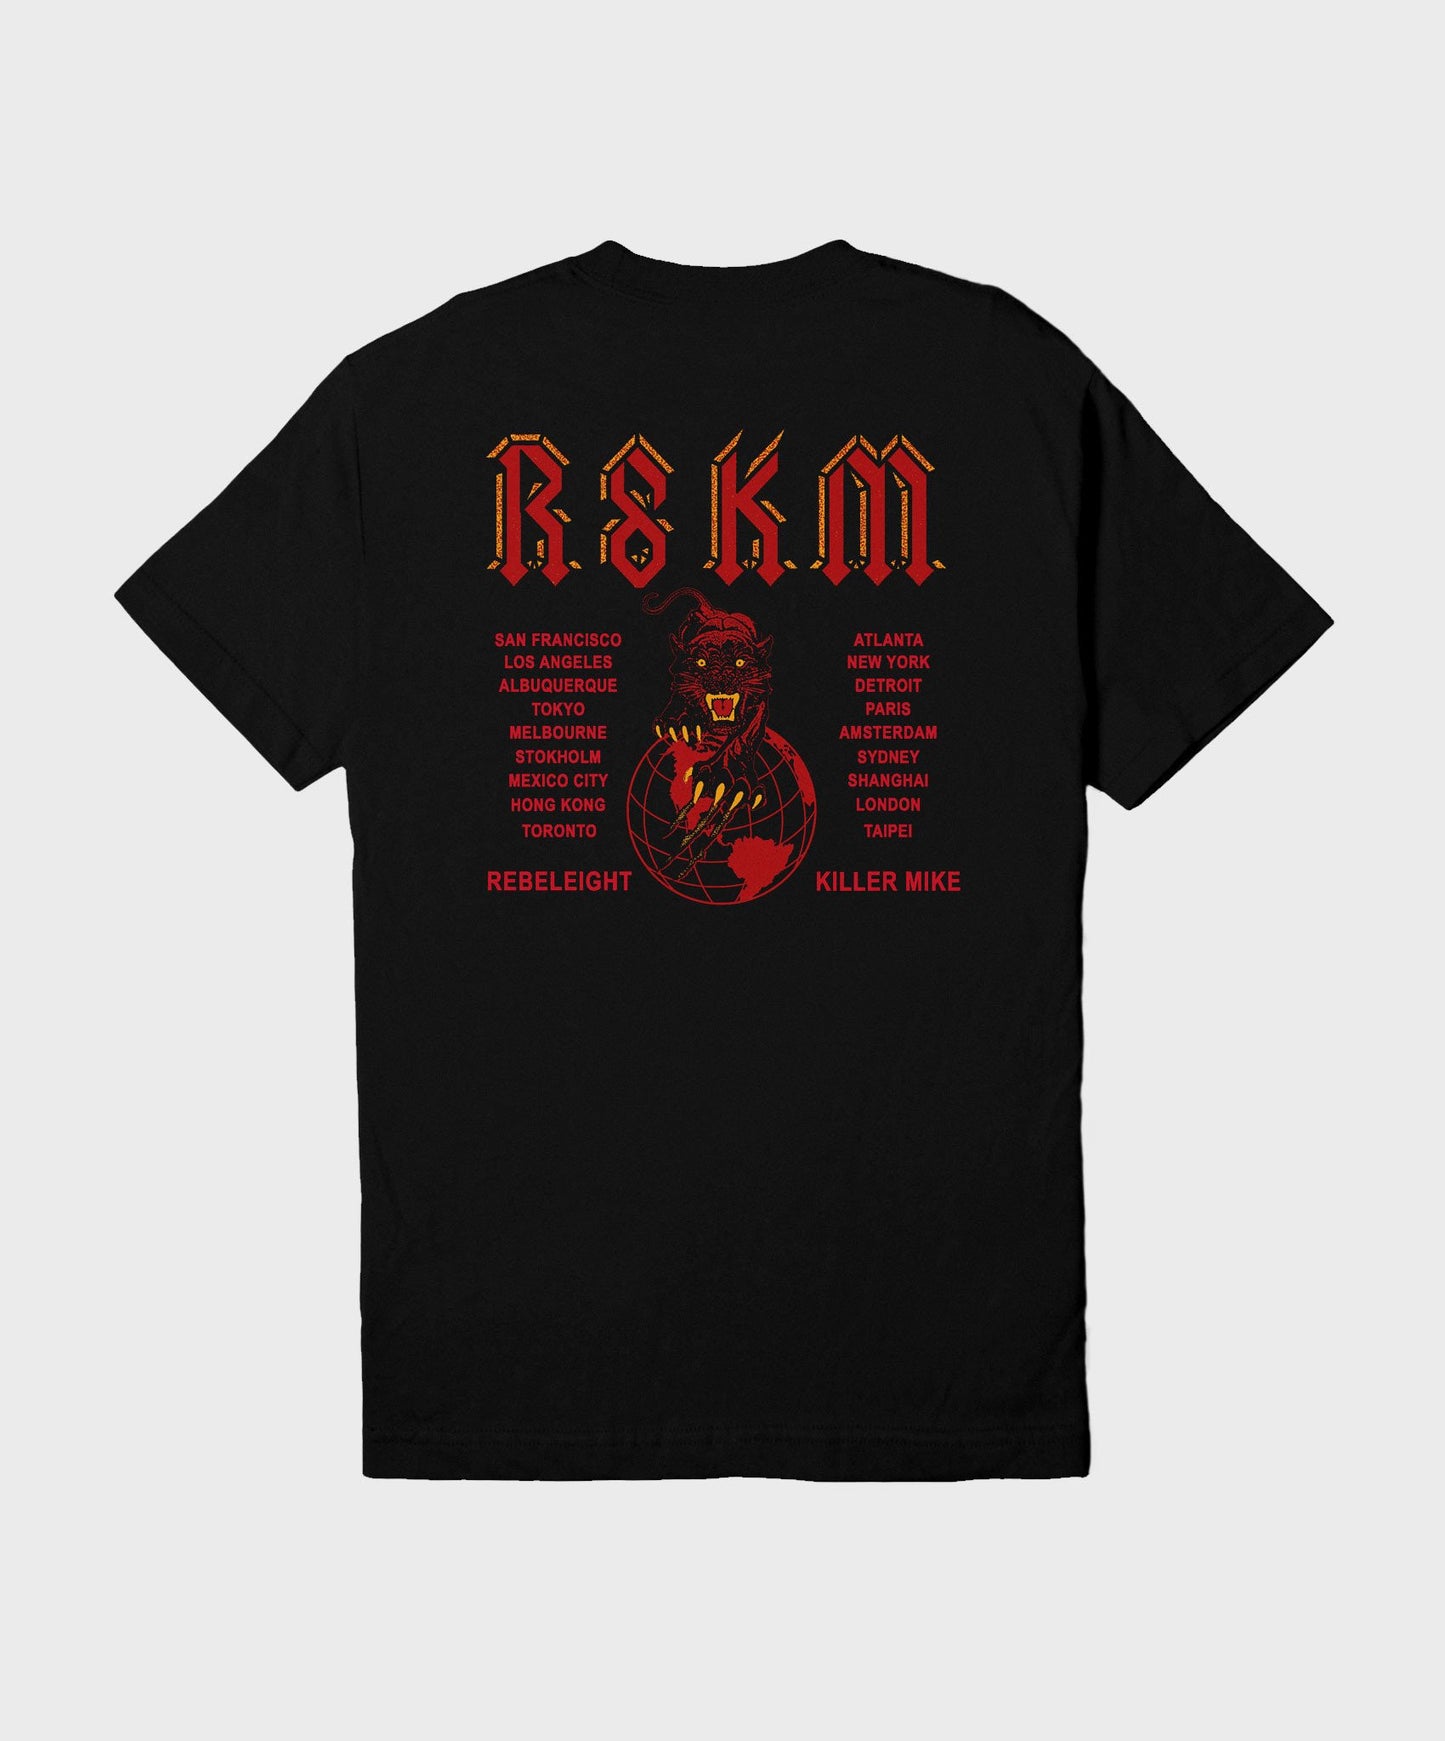 REBEL8 x Killer Mike - World War Tour Men's Shirt, Black - The Giant Peach